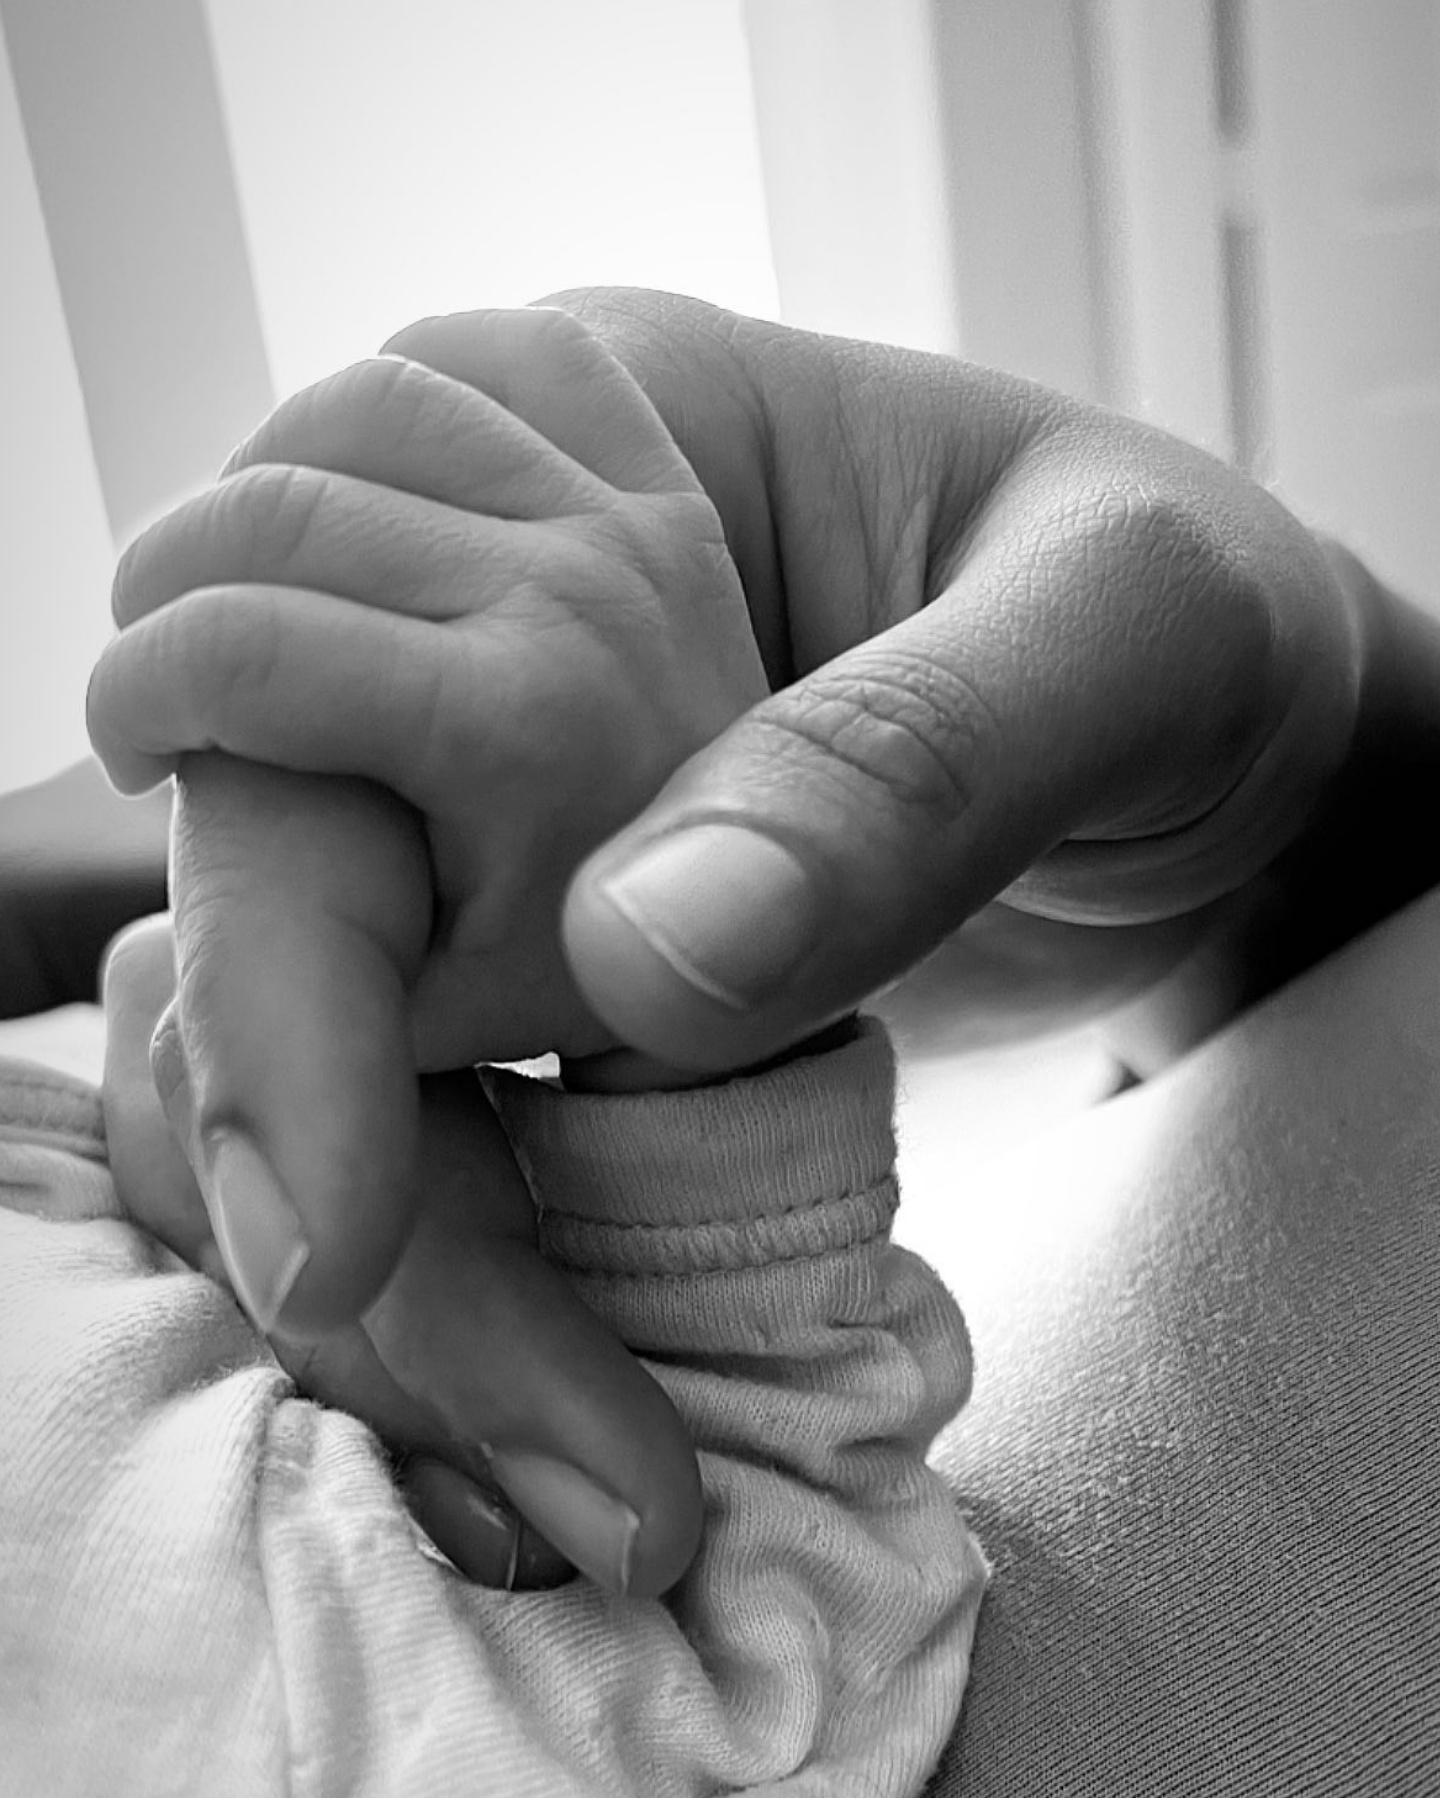 Ilena D'cruz shares an adorable pic of holding her newborn's hand